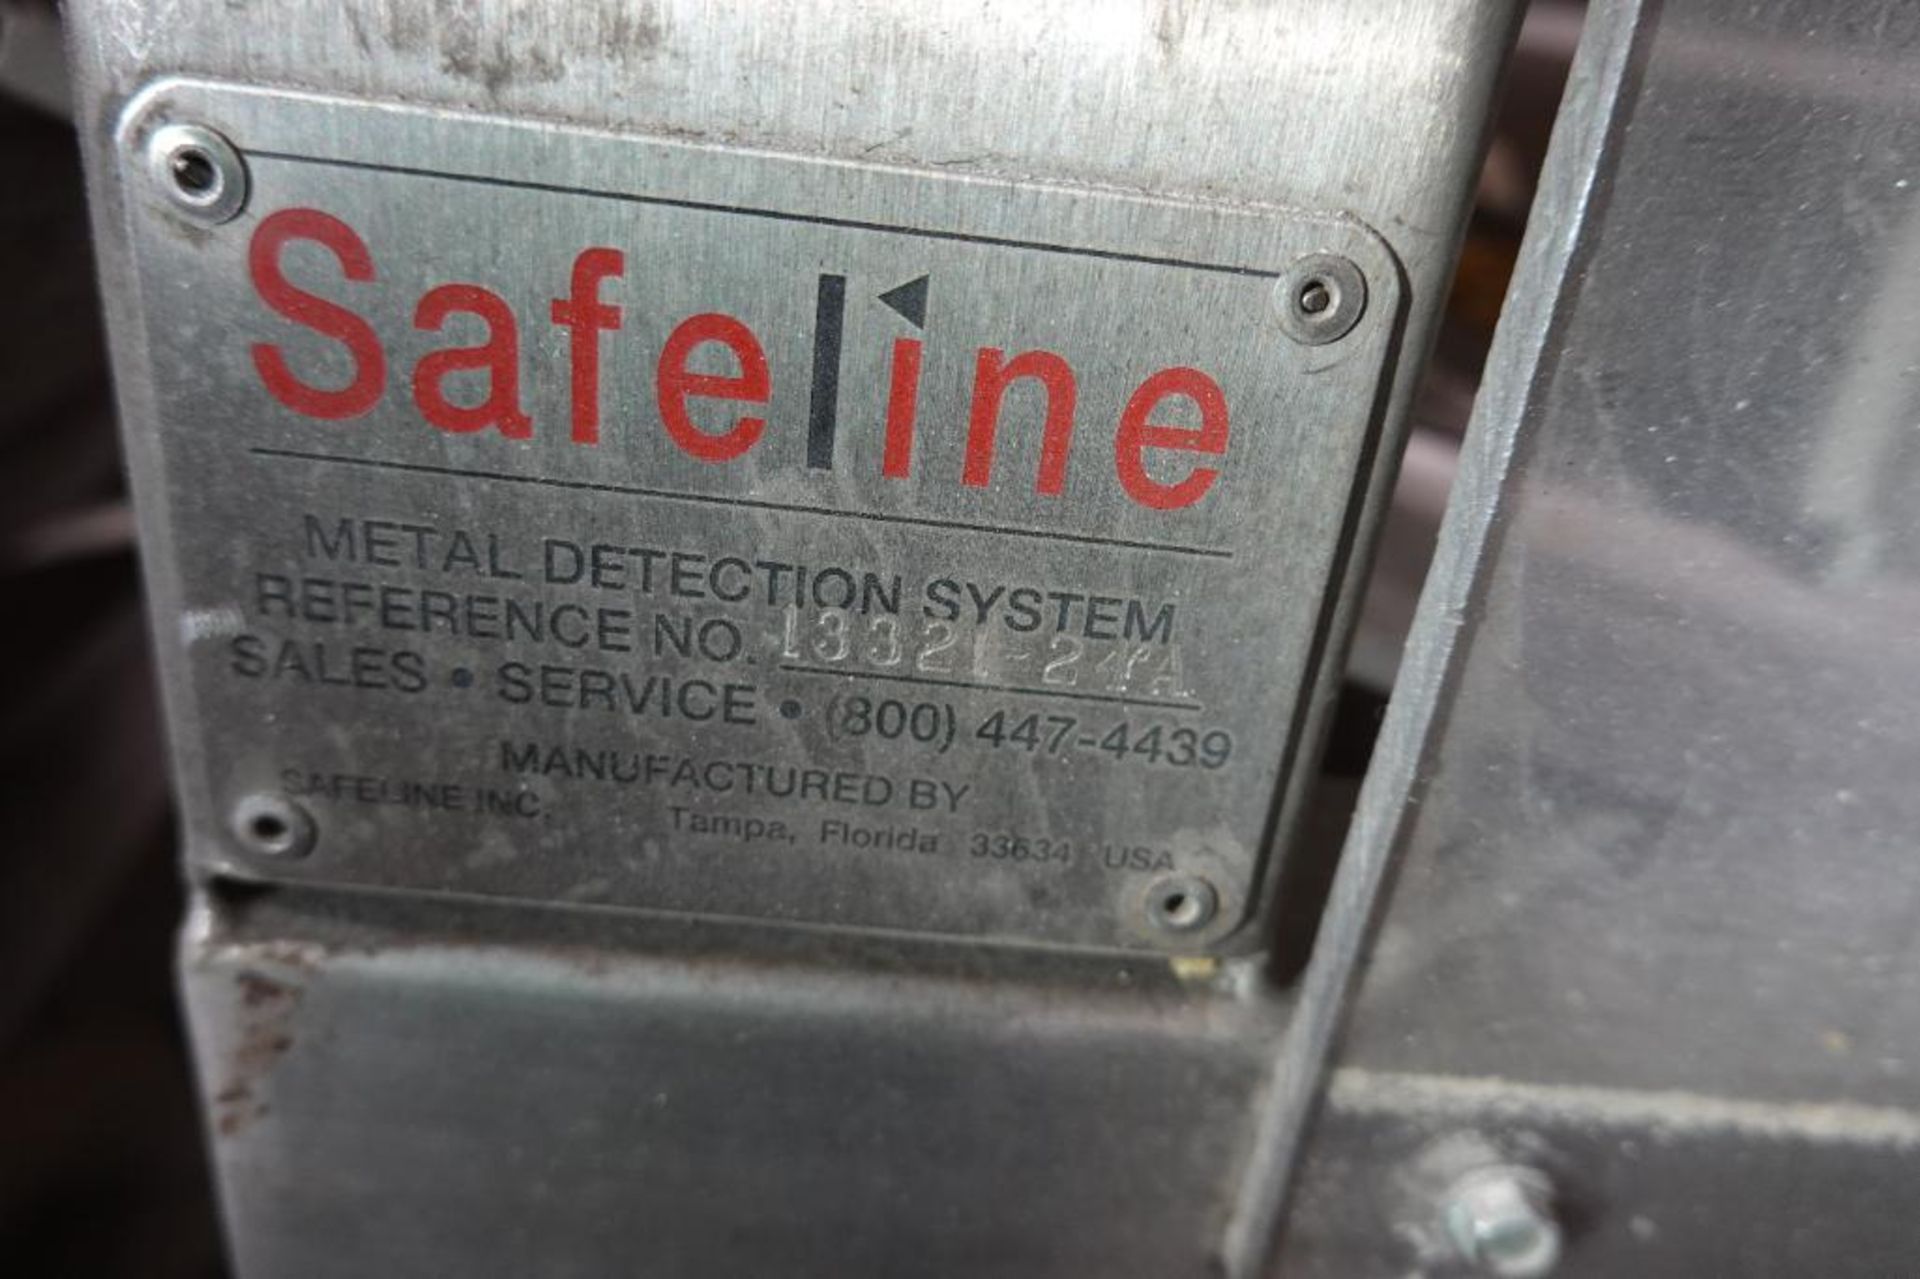 Safeline metal detector with incline conveyor - Image 8 of 10